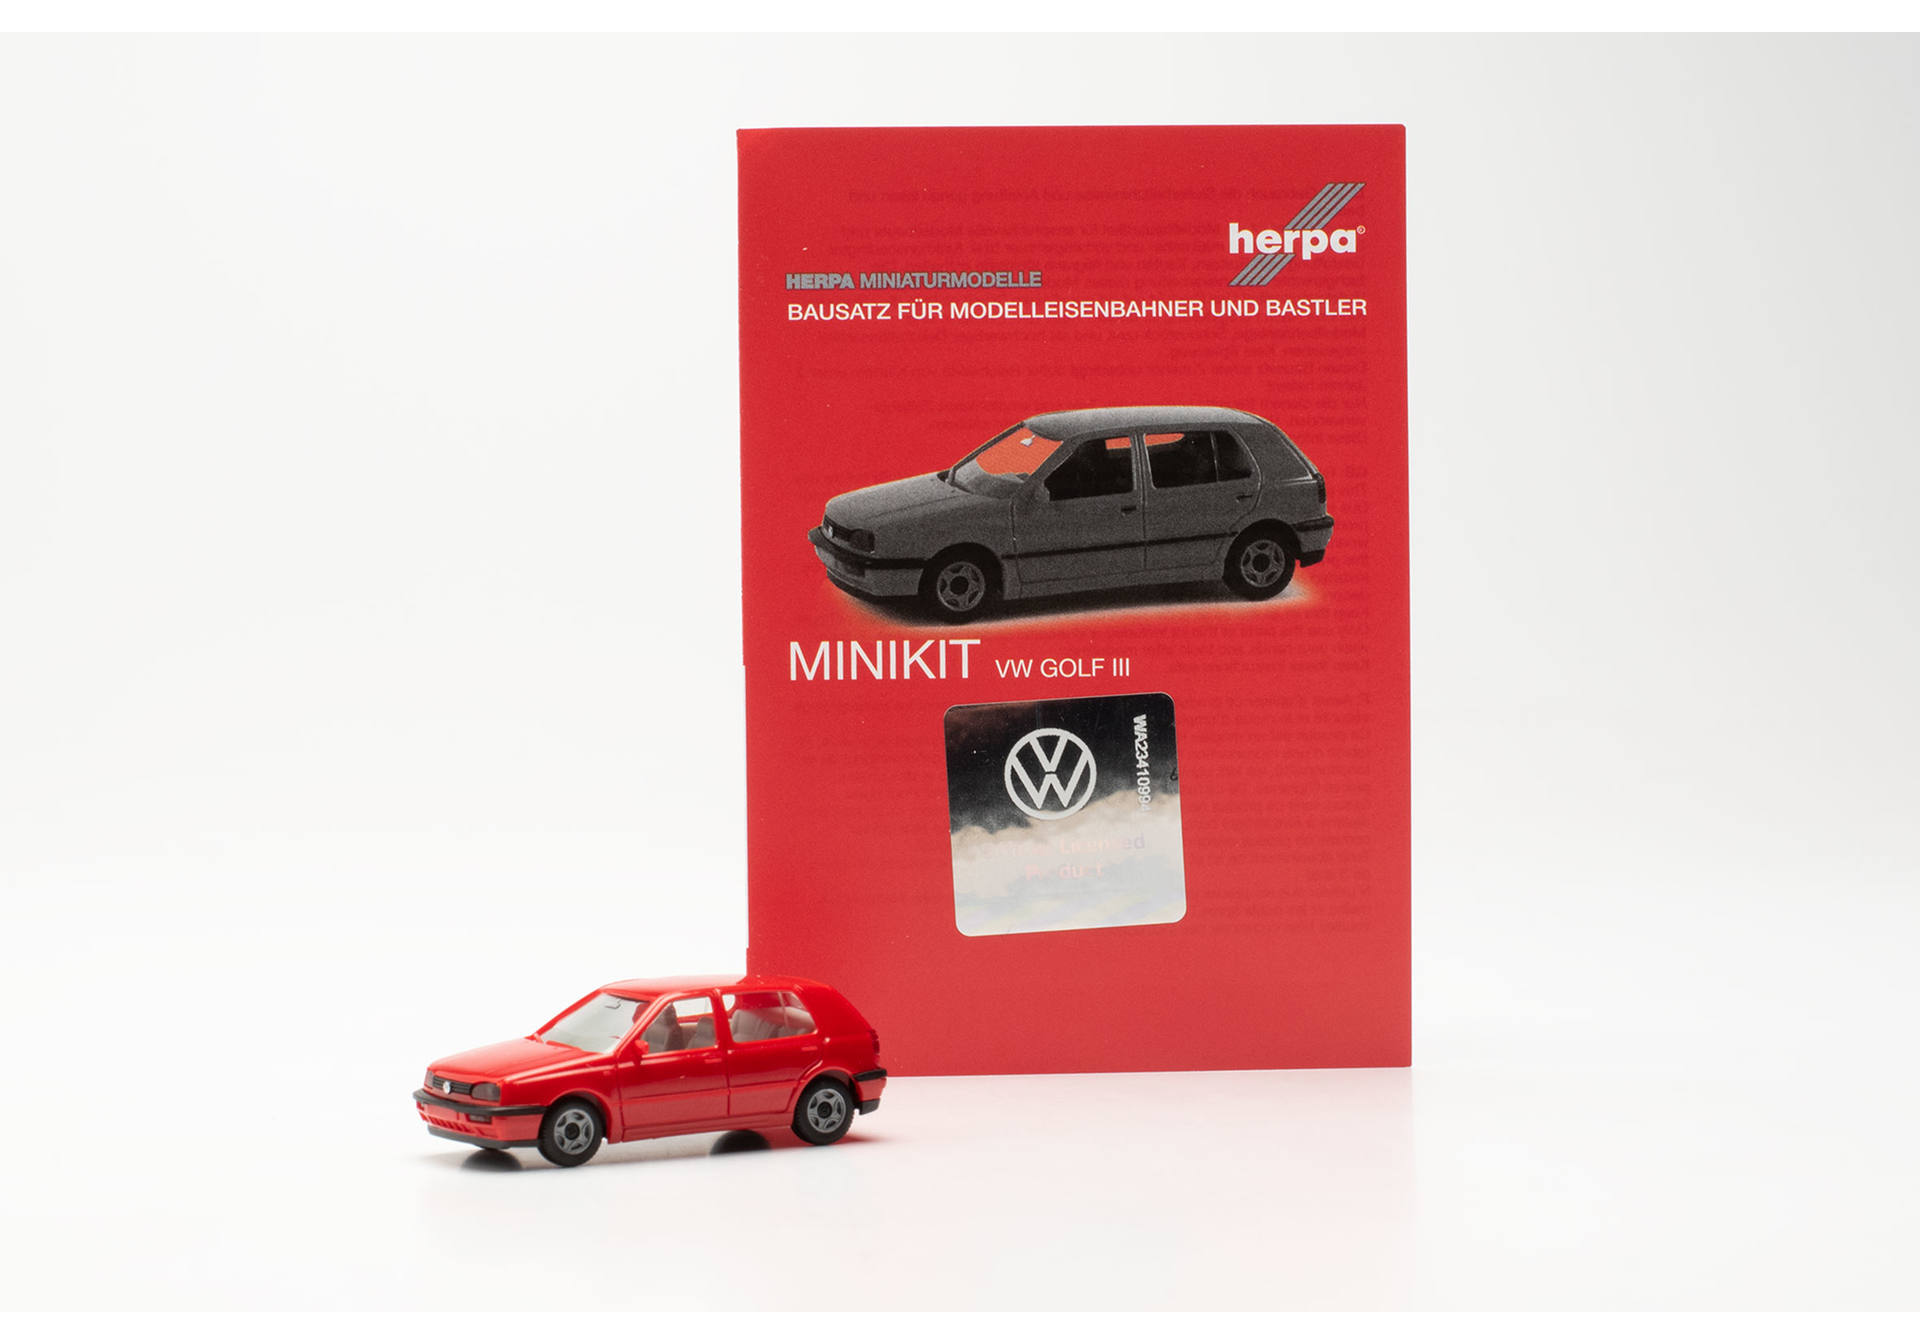 Minikit VW Golf III, light red